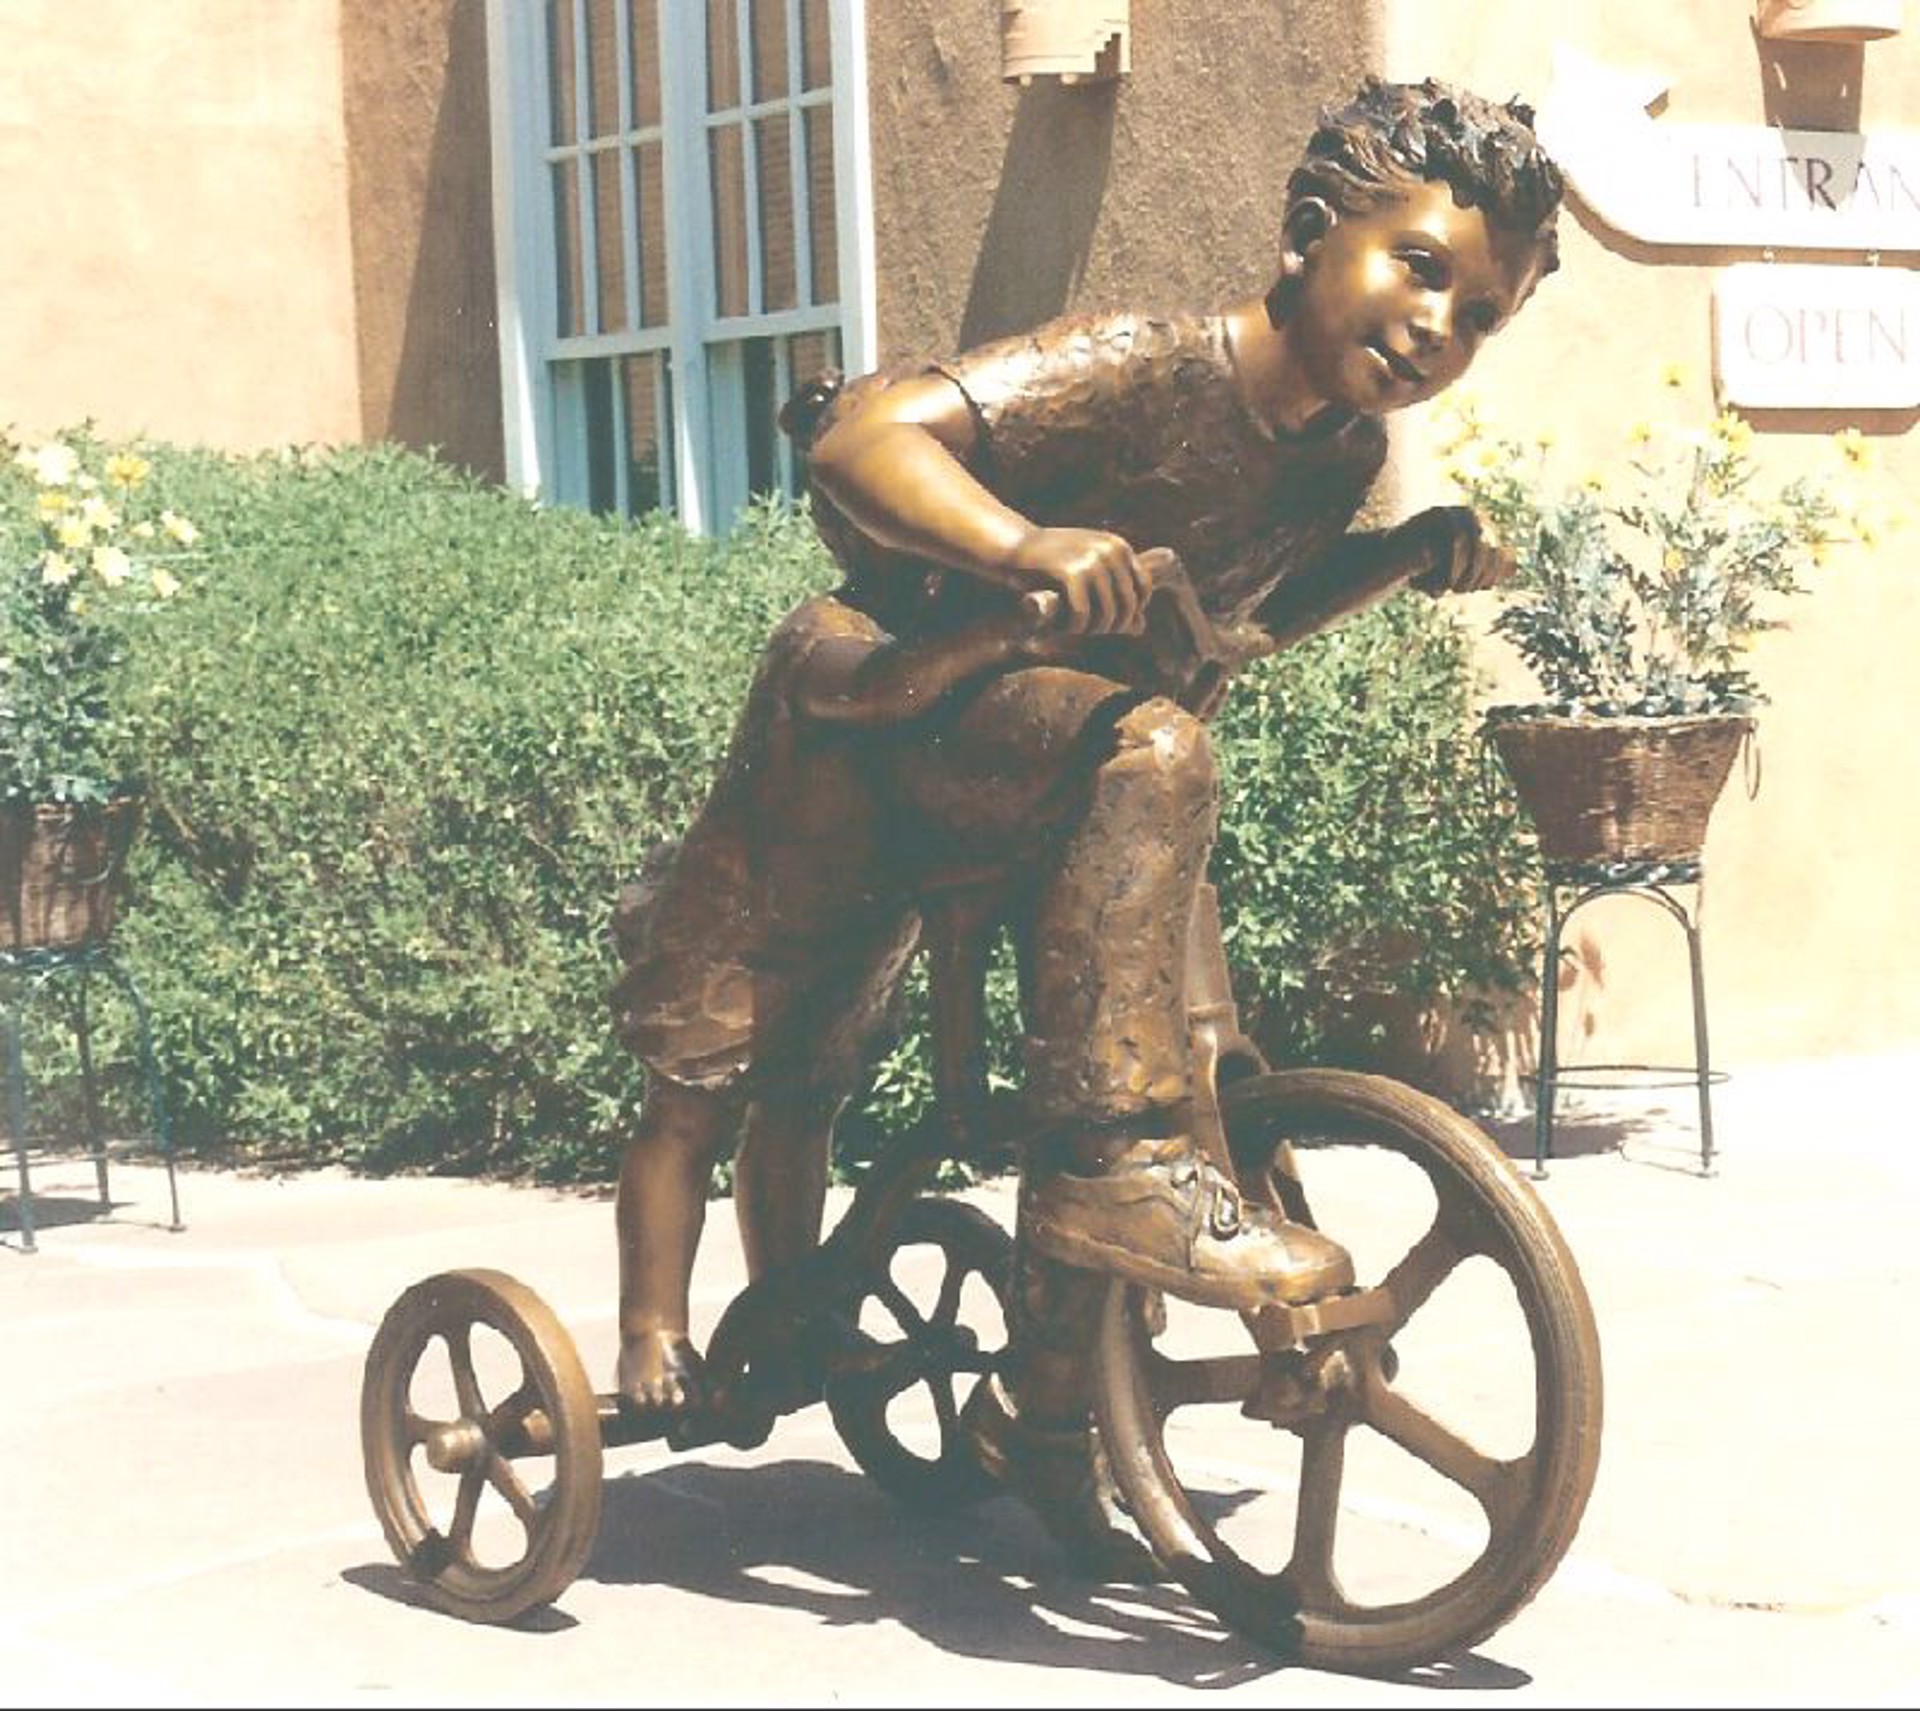 Hitchin' a Ride by L'Deane Trueblood (sculptor)